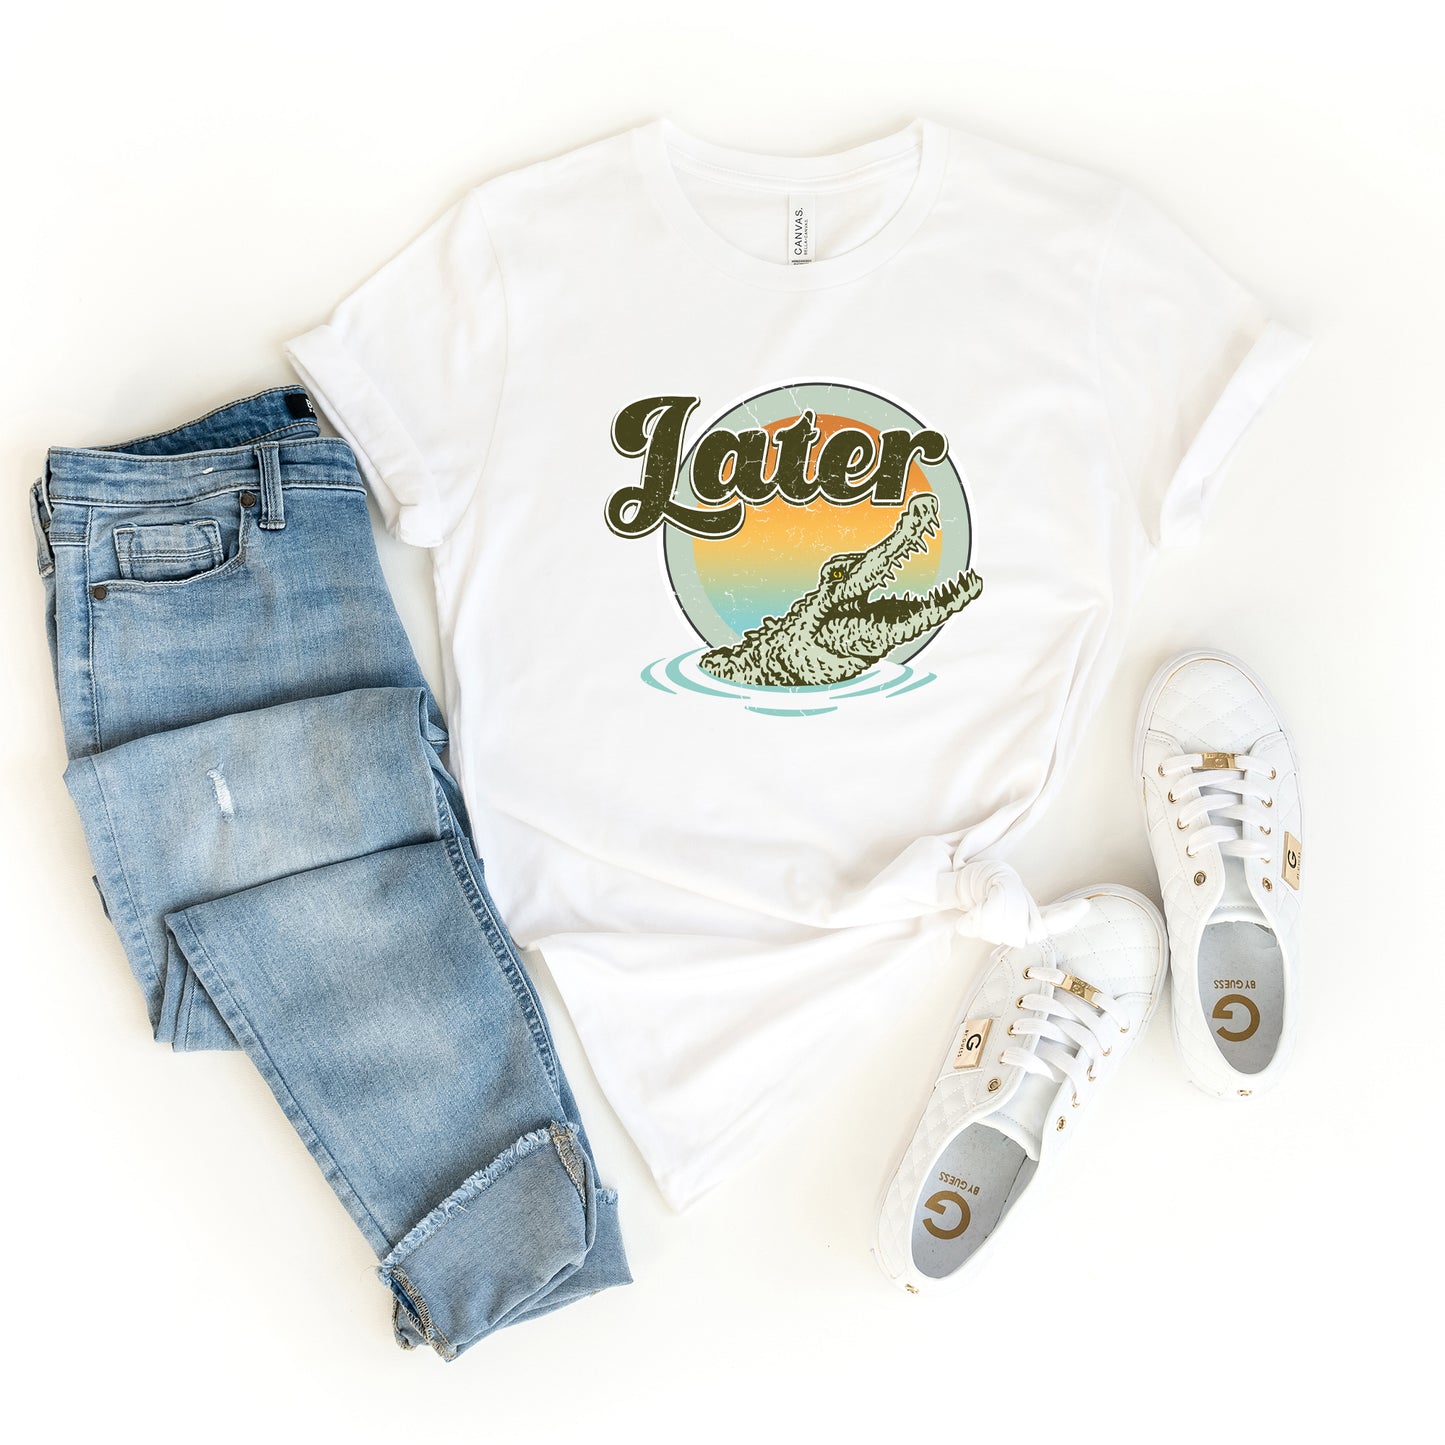 Later Gator | Short Sleeve Graphic Tee